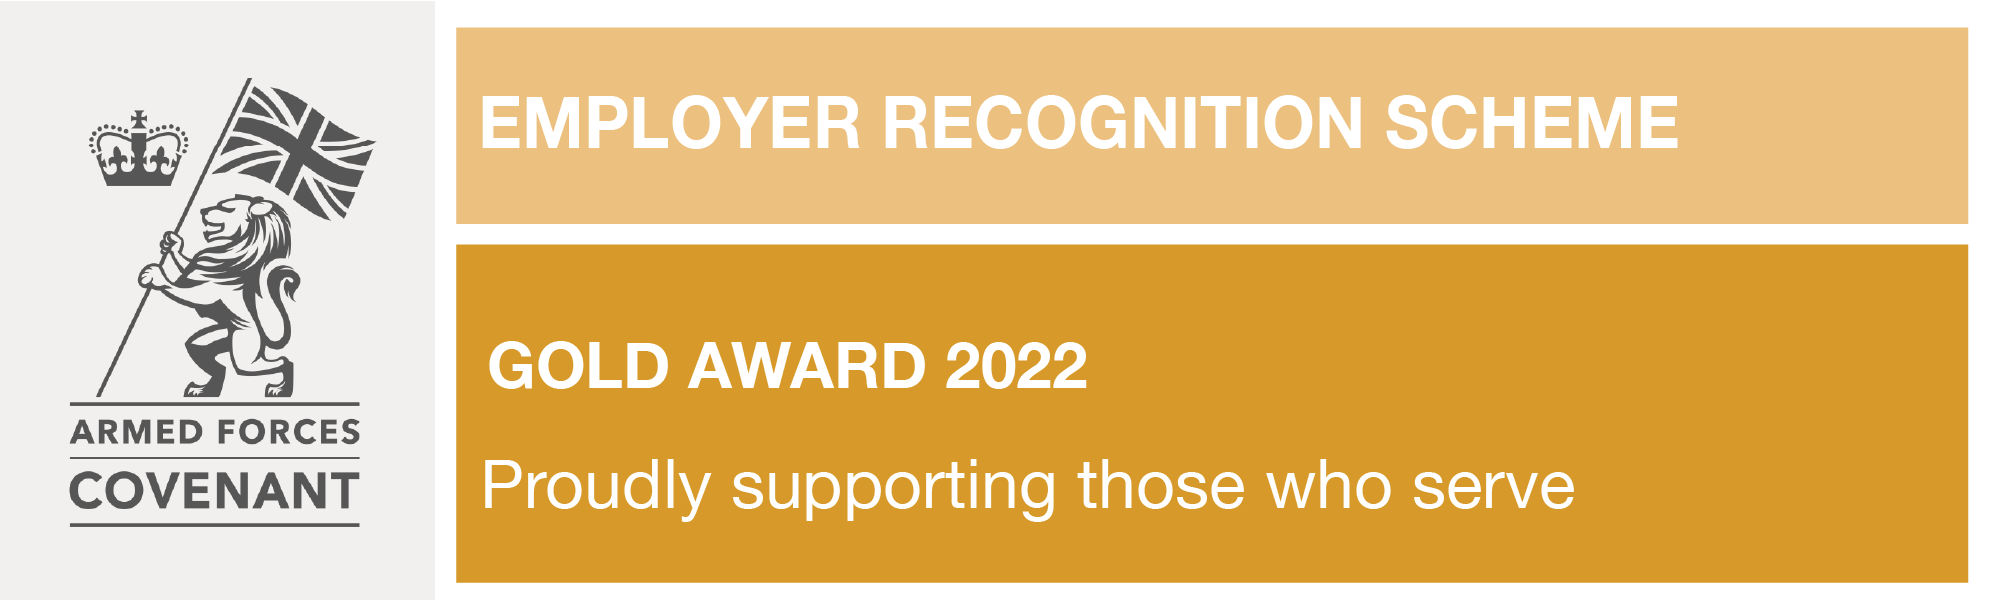 Employer Recognition Scheme Gold Award 2022 logo